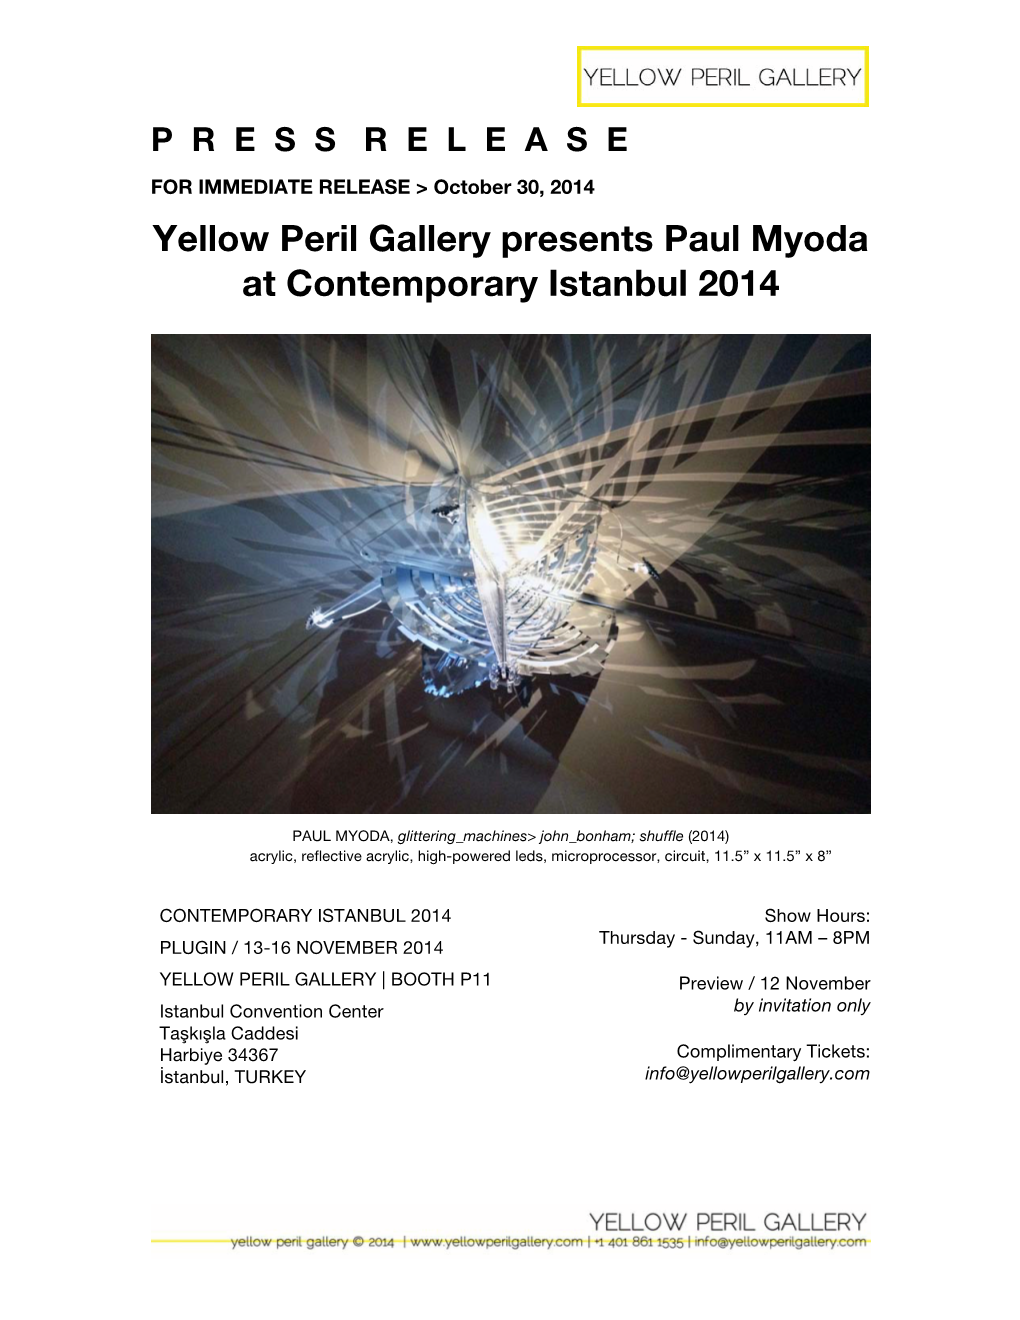 Yellow Peril Gallery Presents Paul Myoda at Contemporary Istanbul